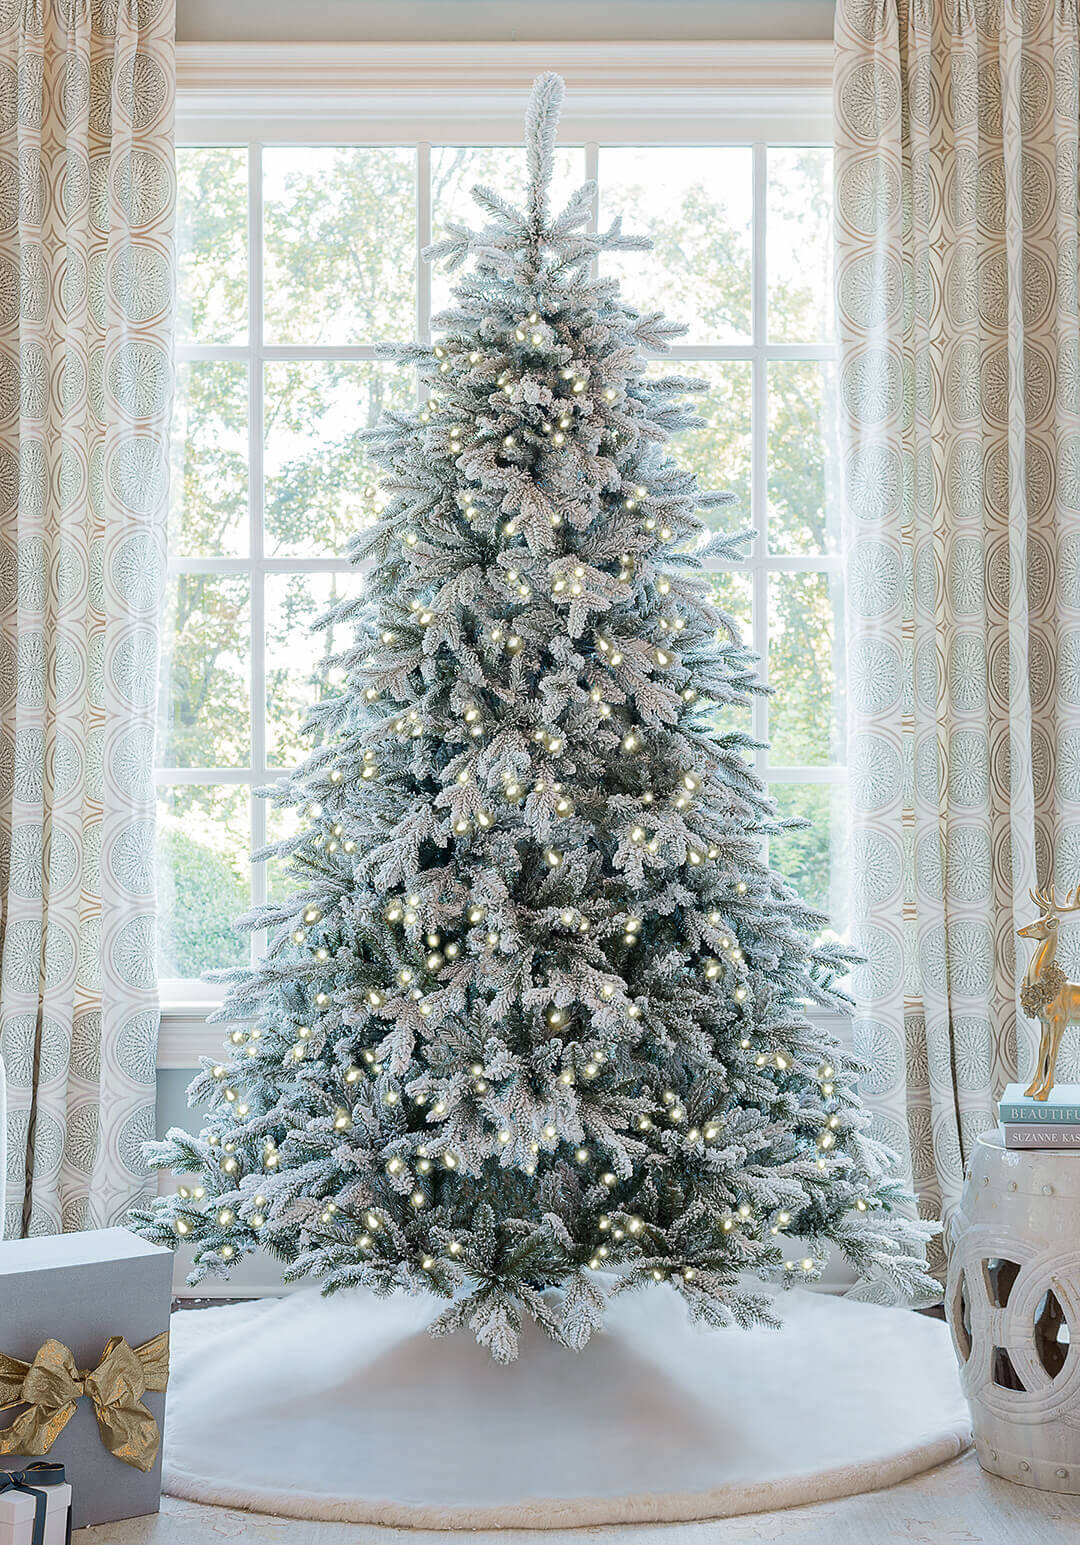 DIY Diamond Painting Christmas Tree Ornaments LED Hanging Star Lights